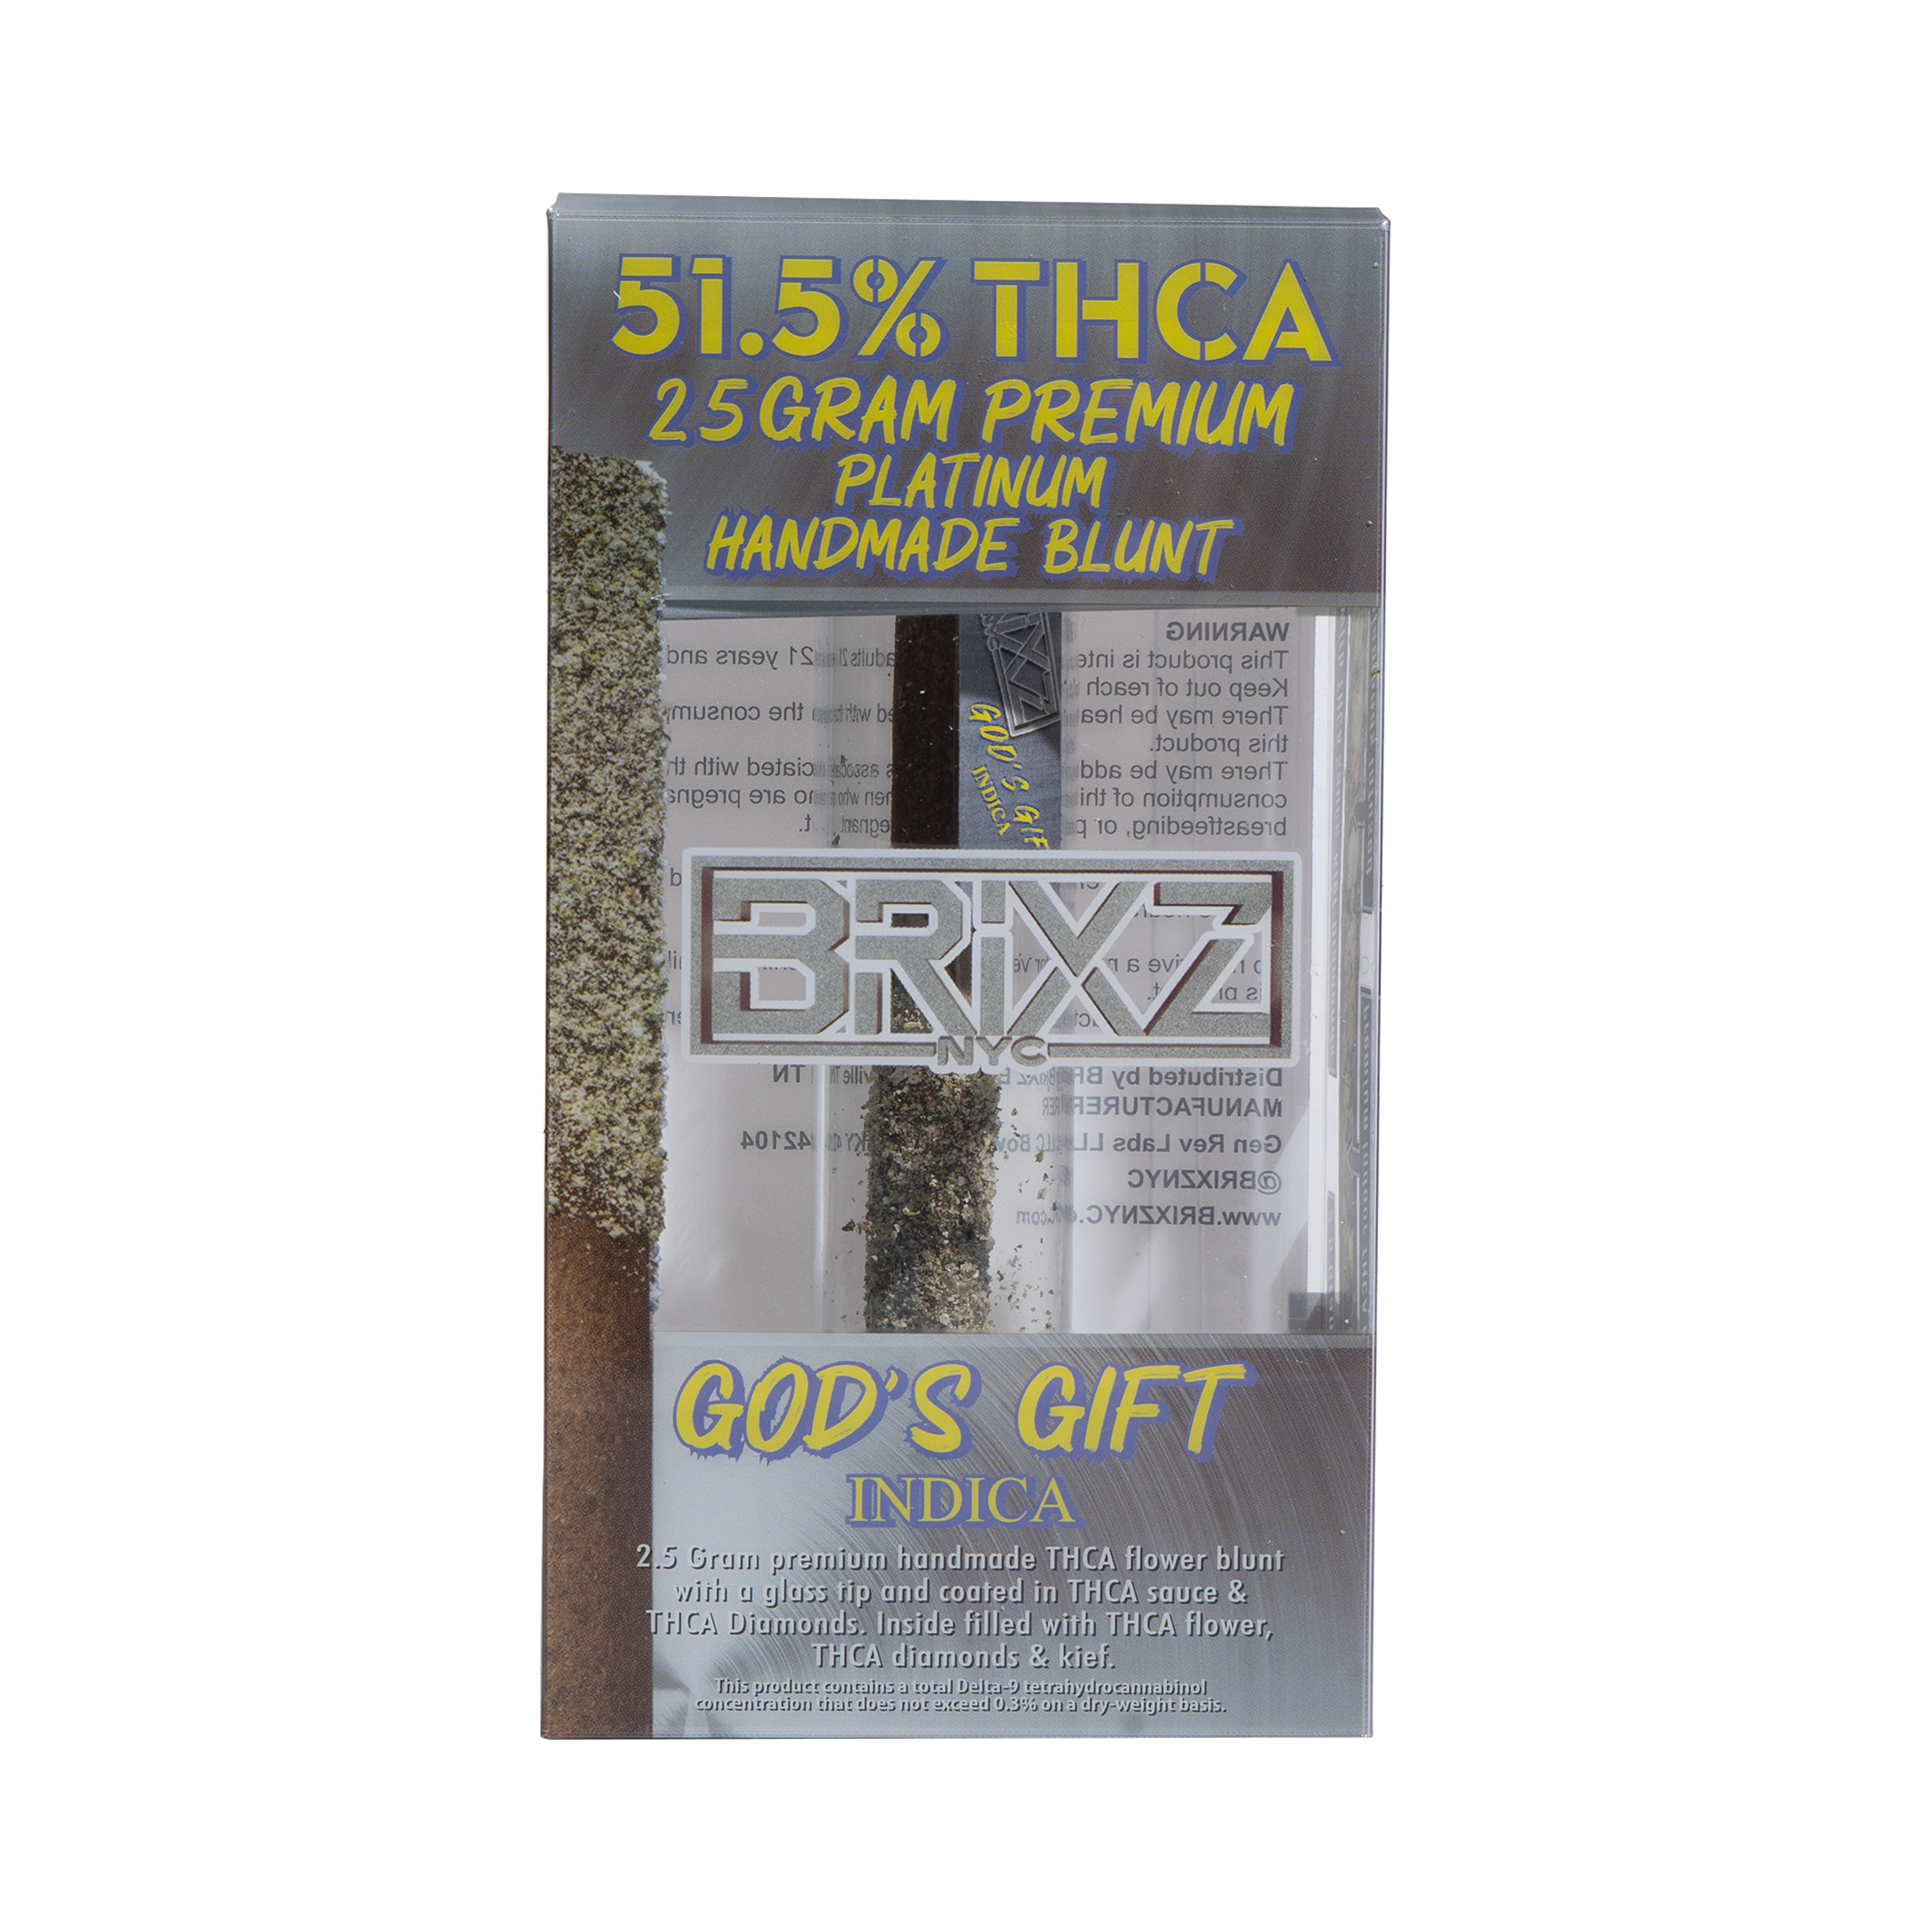 DAZED | BRIXZ PLATINUM THC-A HANDMADE BLUNT SINGLE | 2.5G